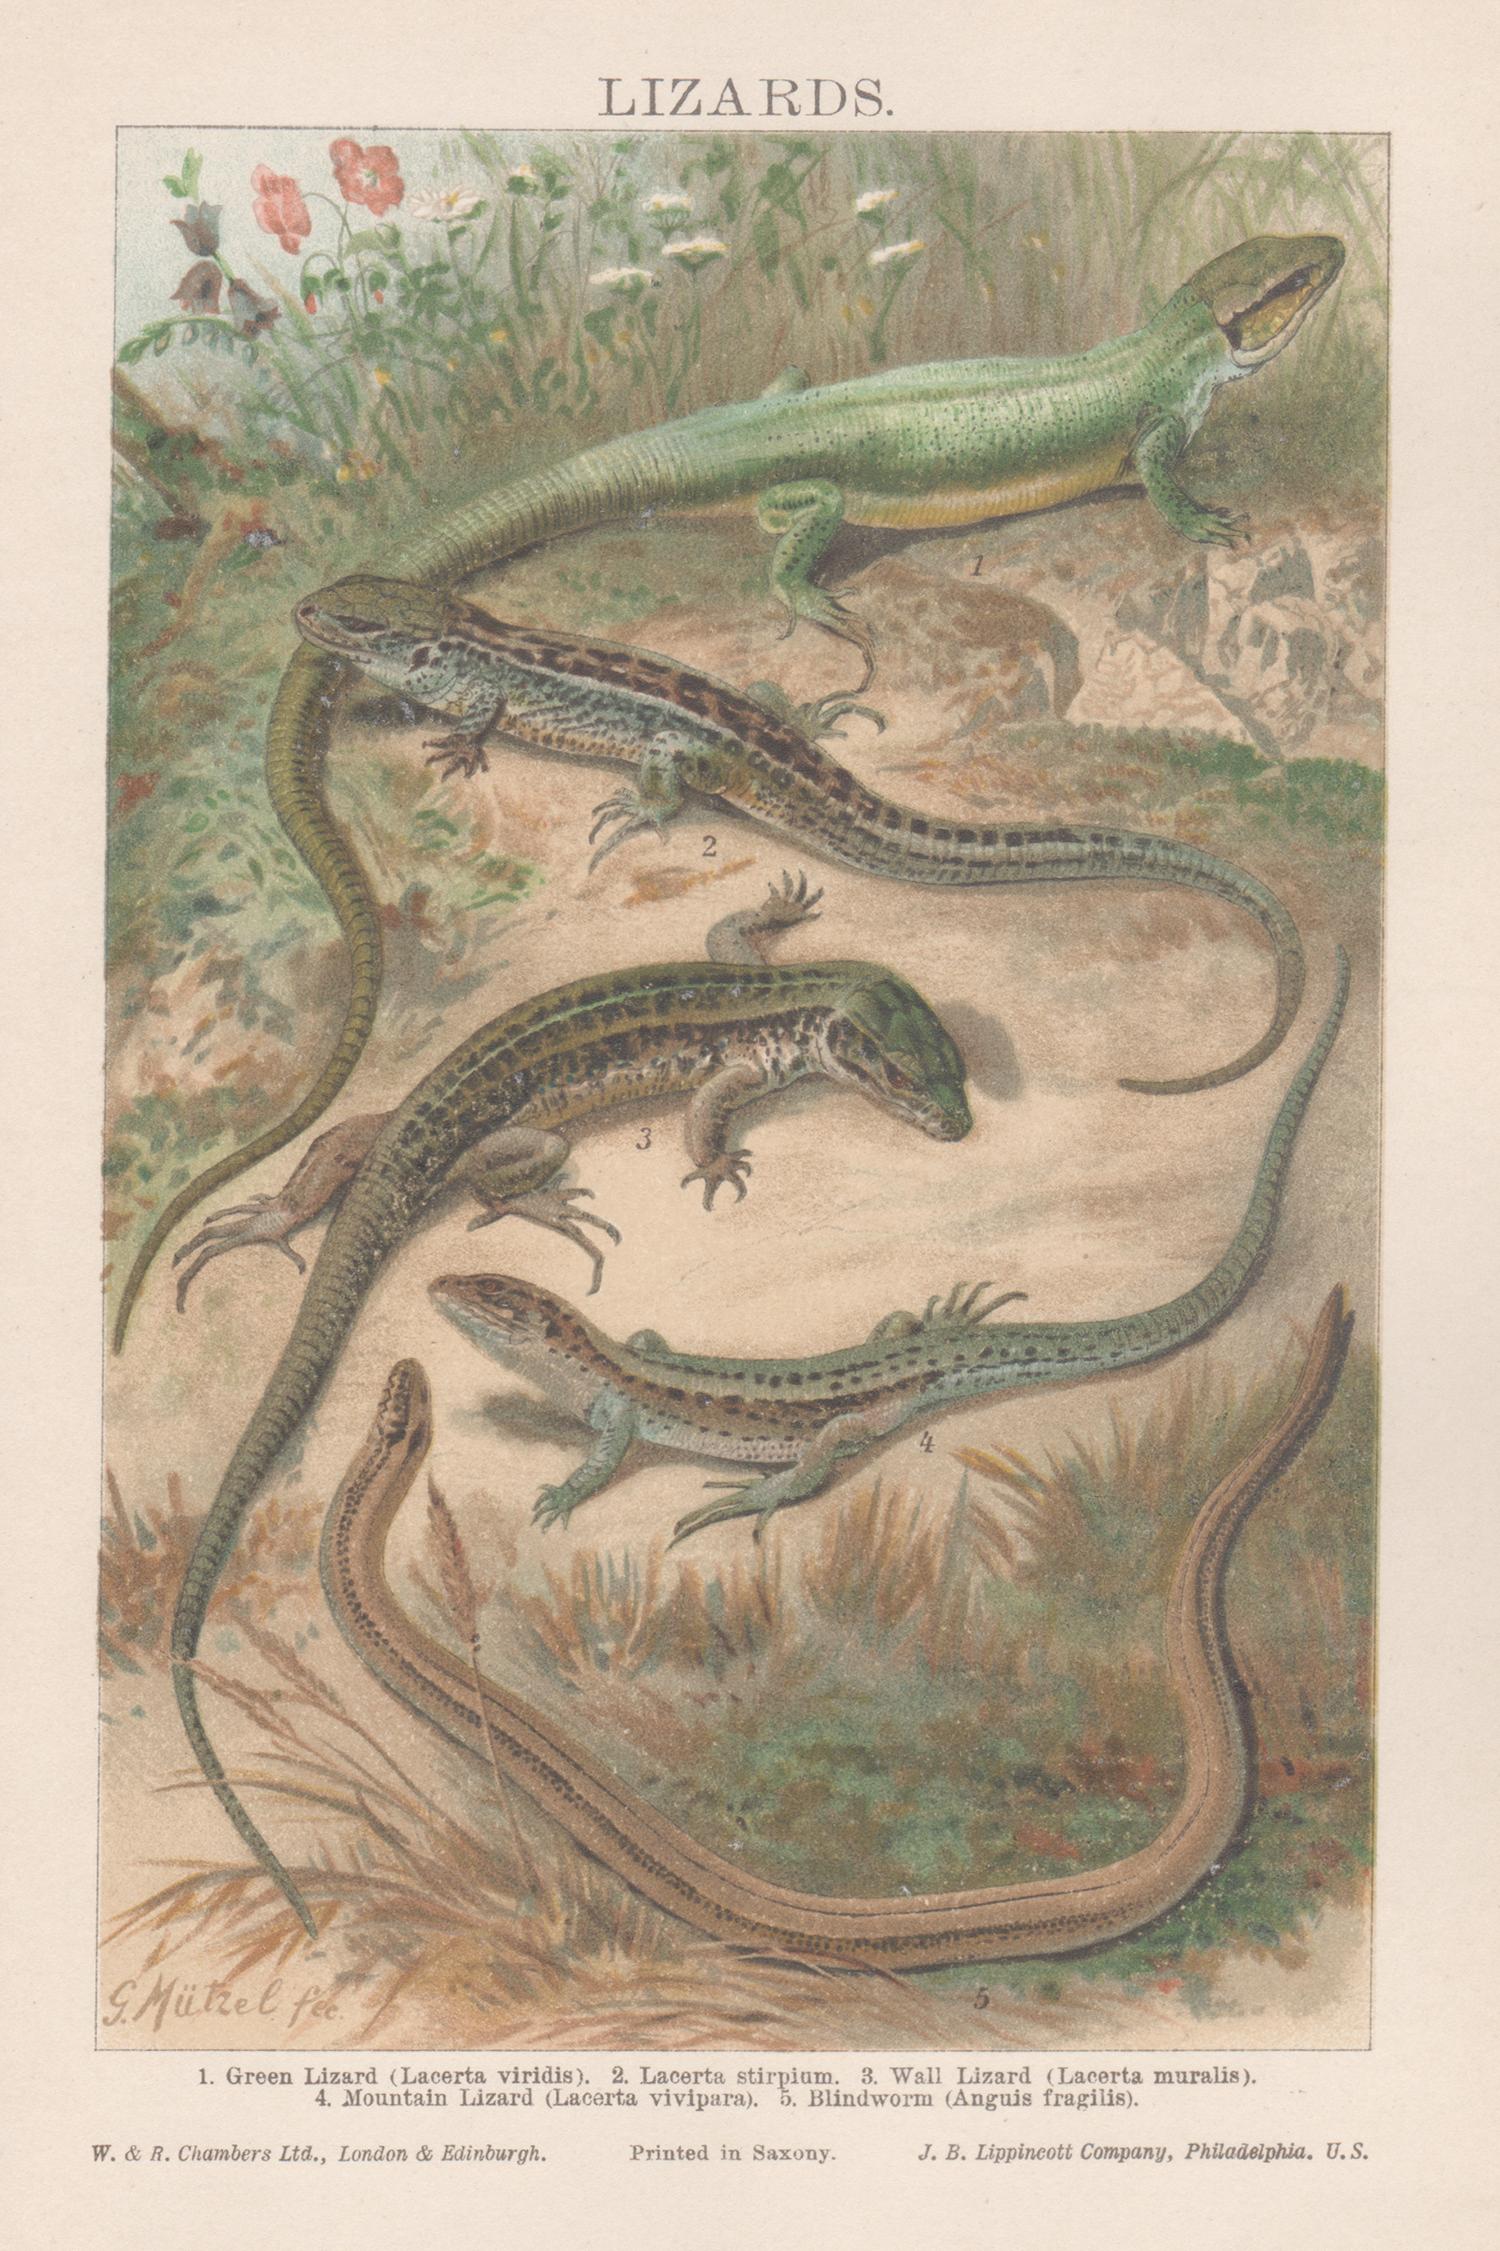 Gustav Mutzel  Animal Print - Lizards, antique natural history reptile chromolithograph print, circa 1895